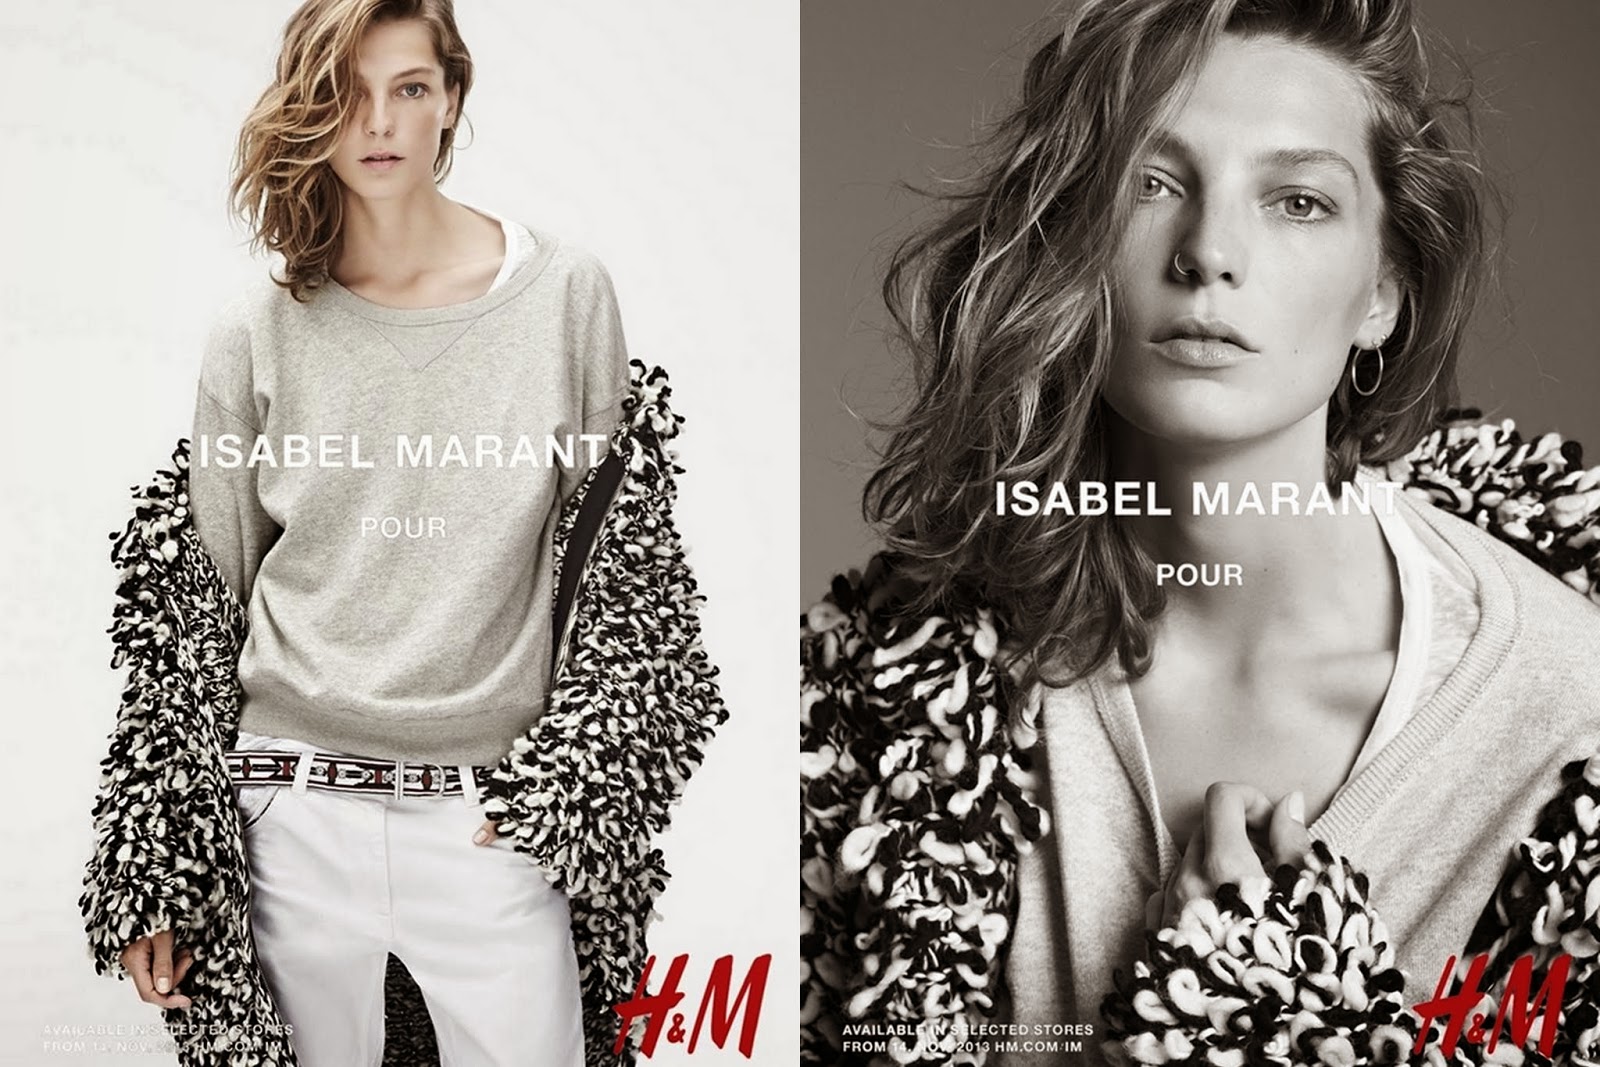 Isabel Marant x H&M Campaign 